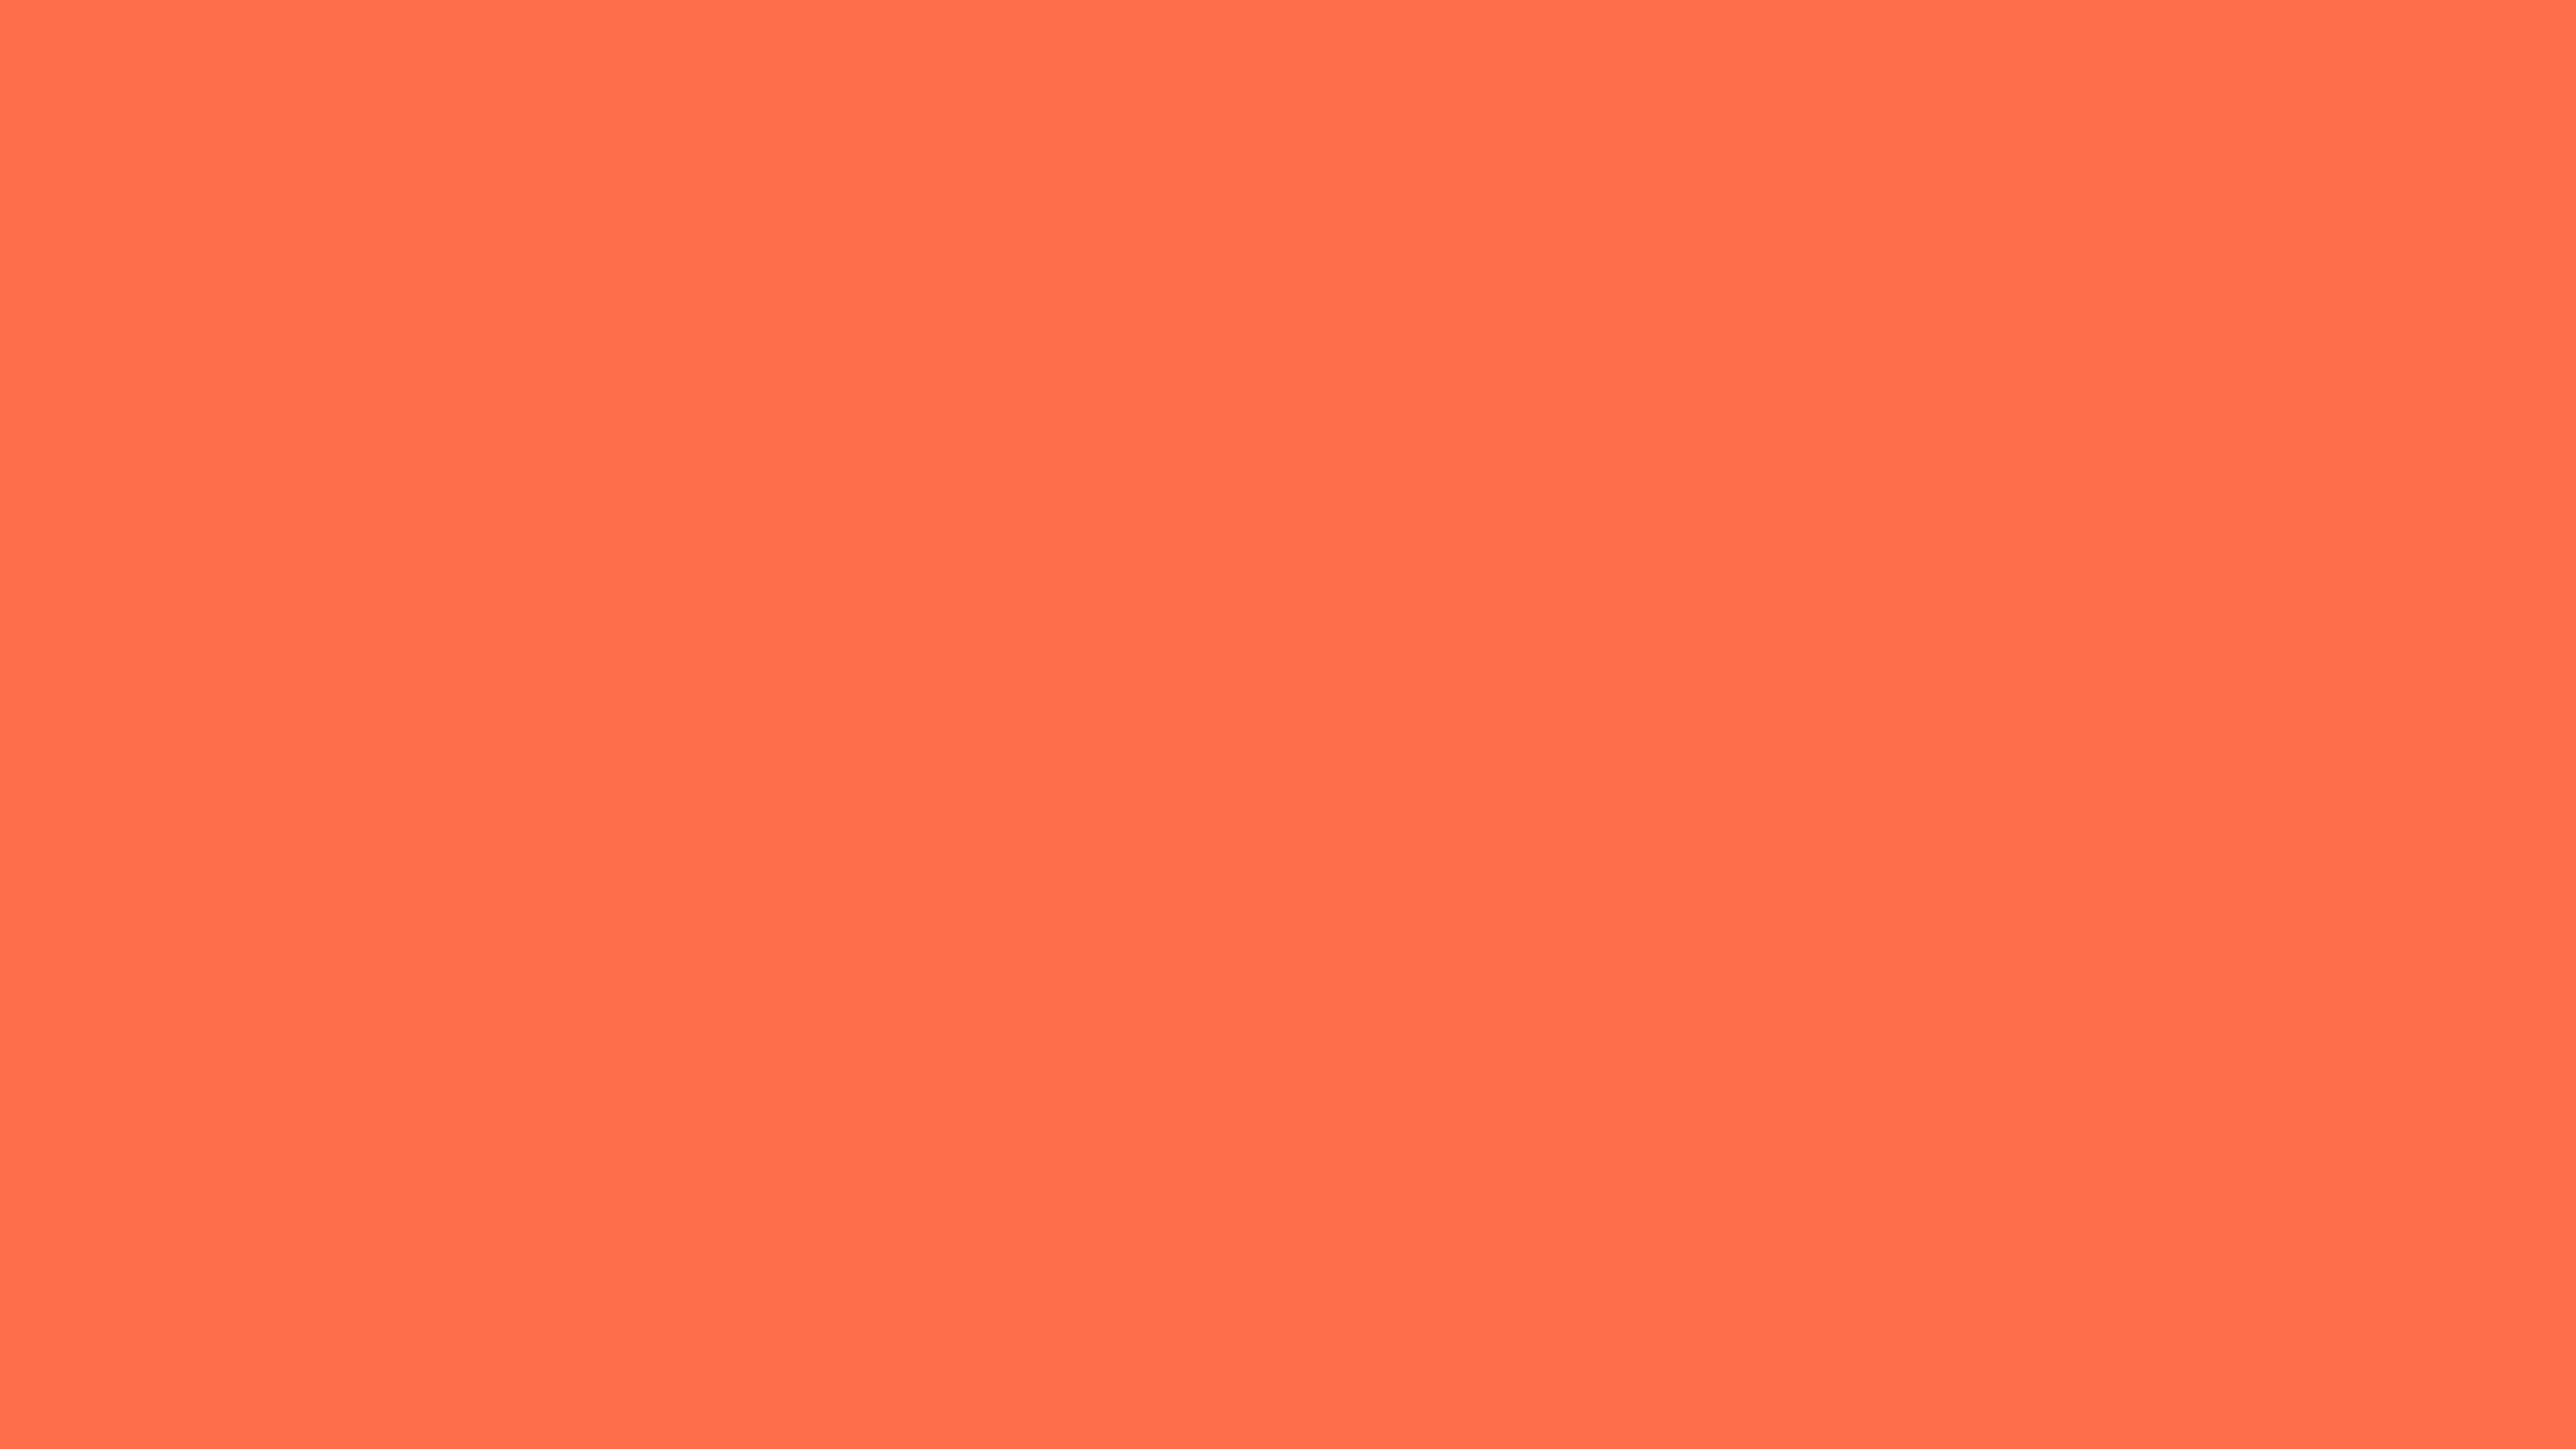 3840x2160 Outrageous Orange Solid Color Background